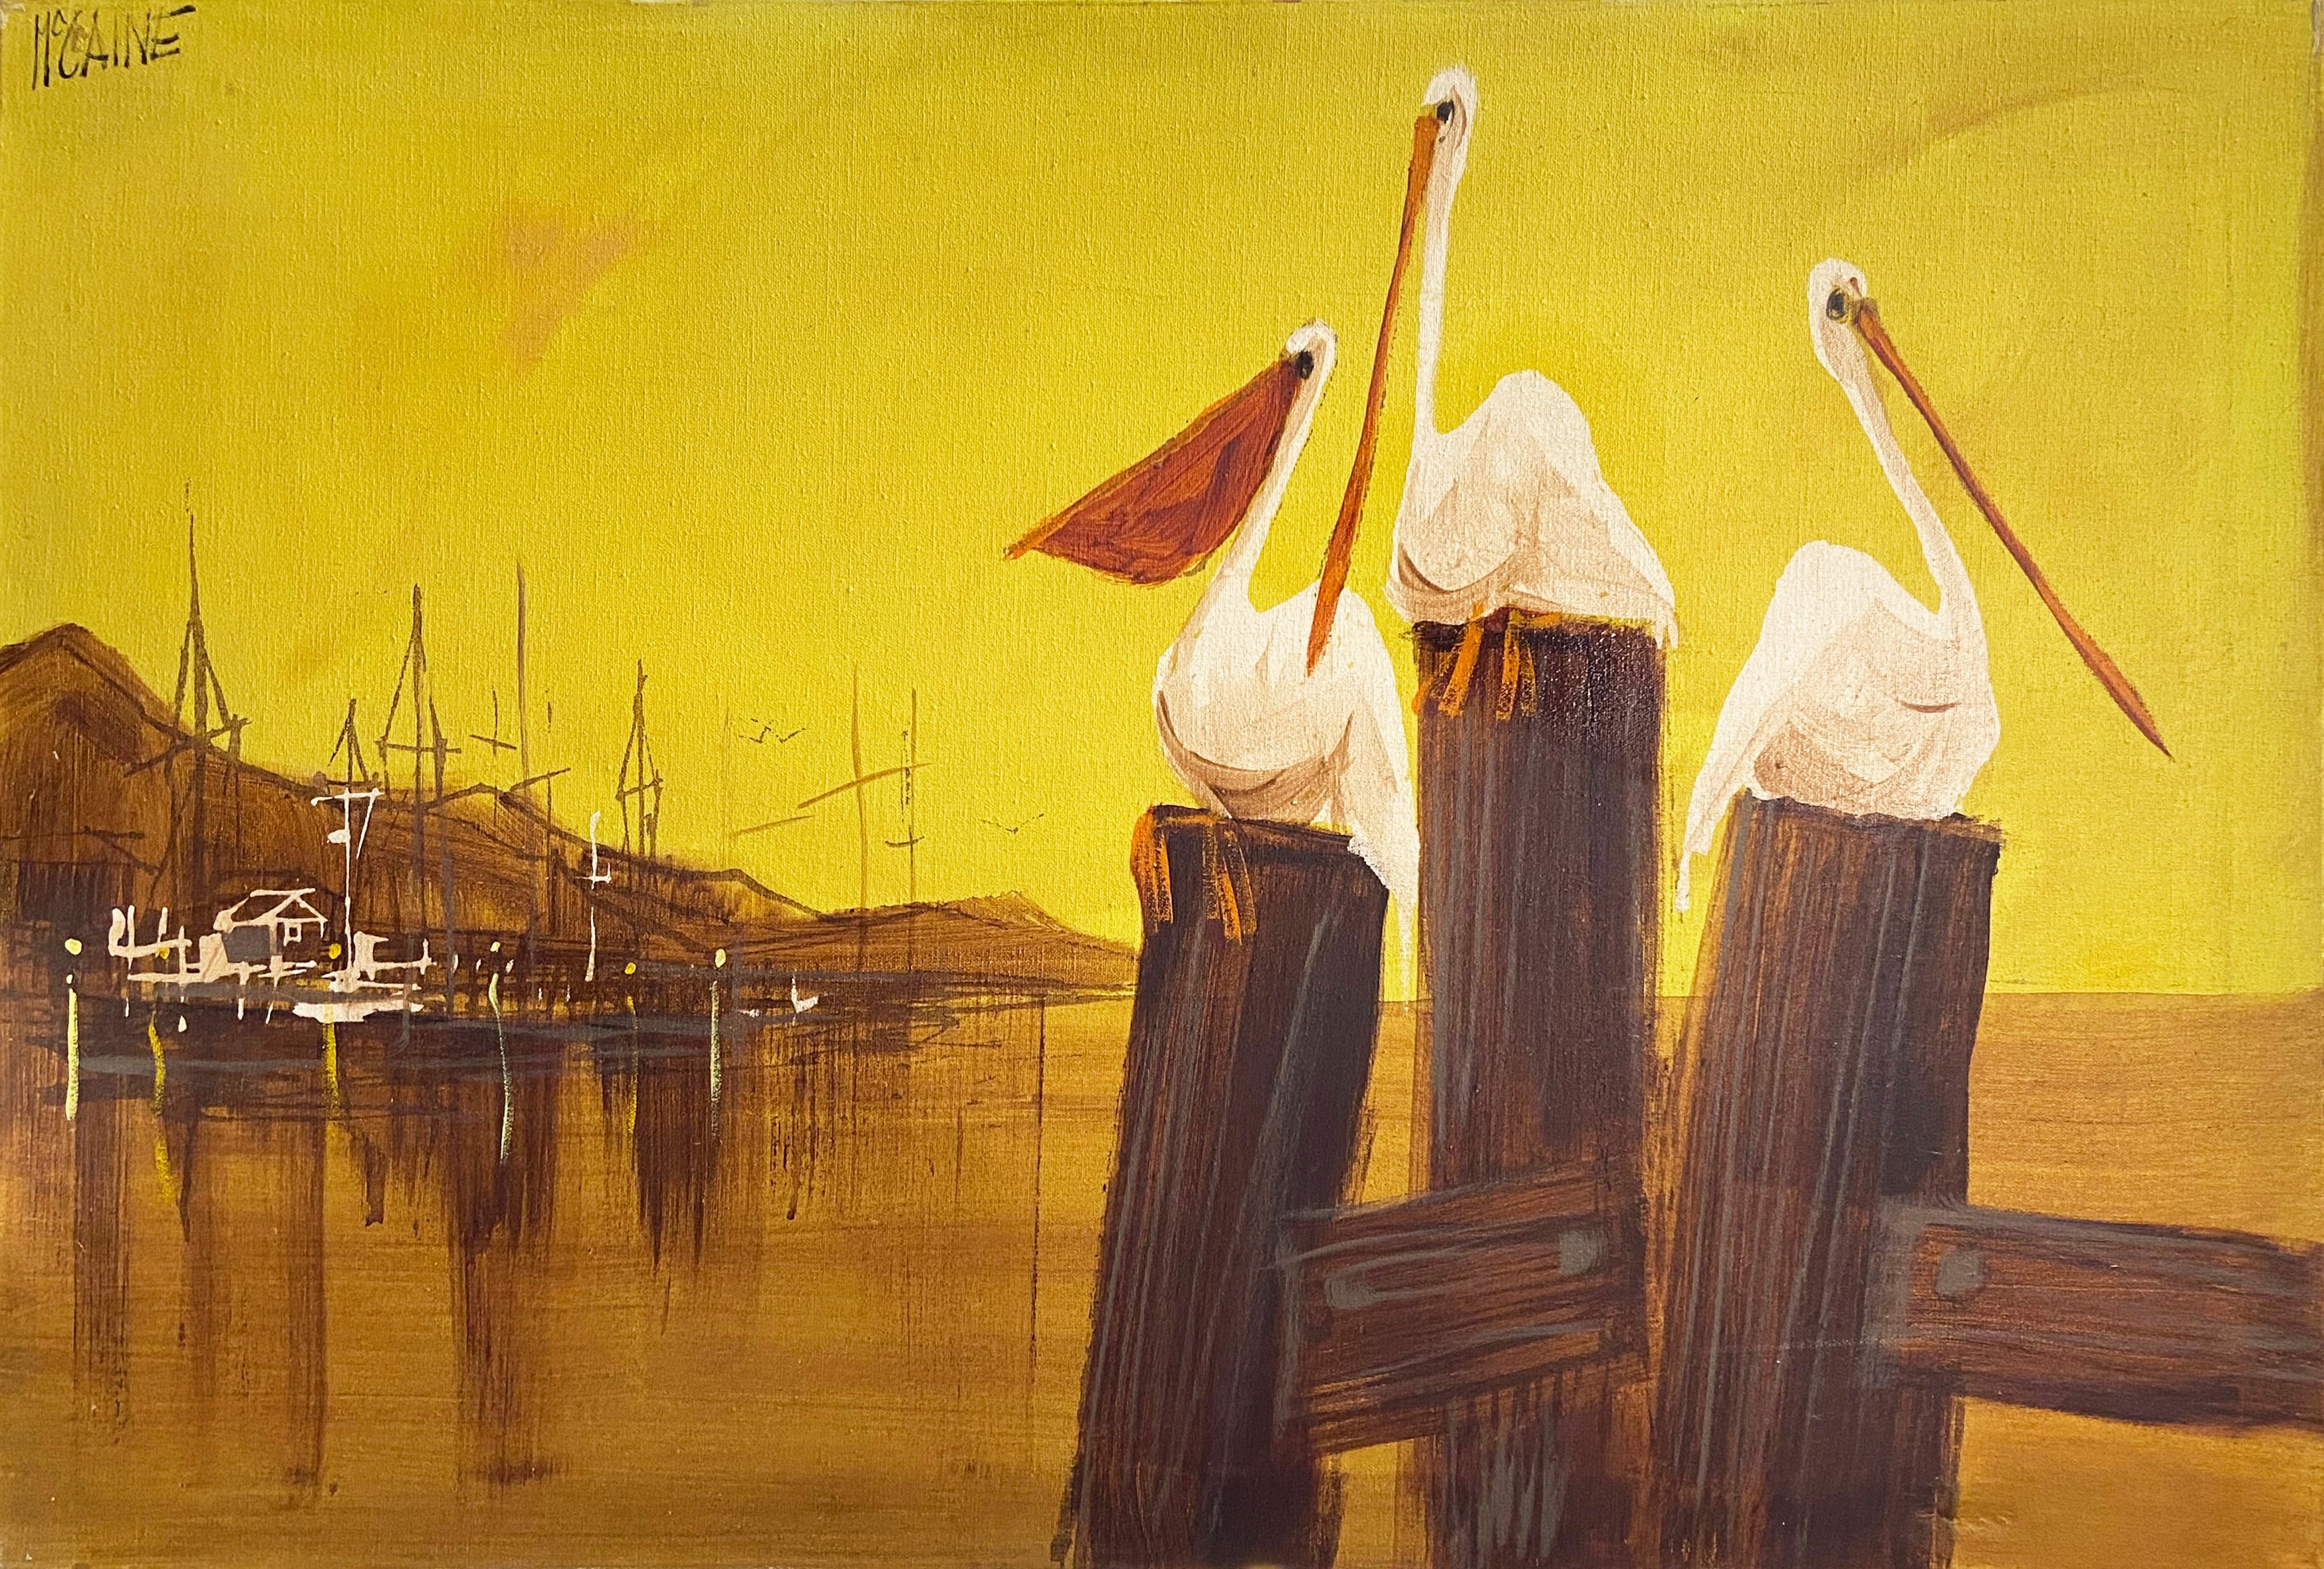 Sunset Pelicans by Robert McCaine, 1975~P77611352